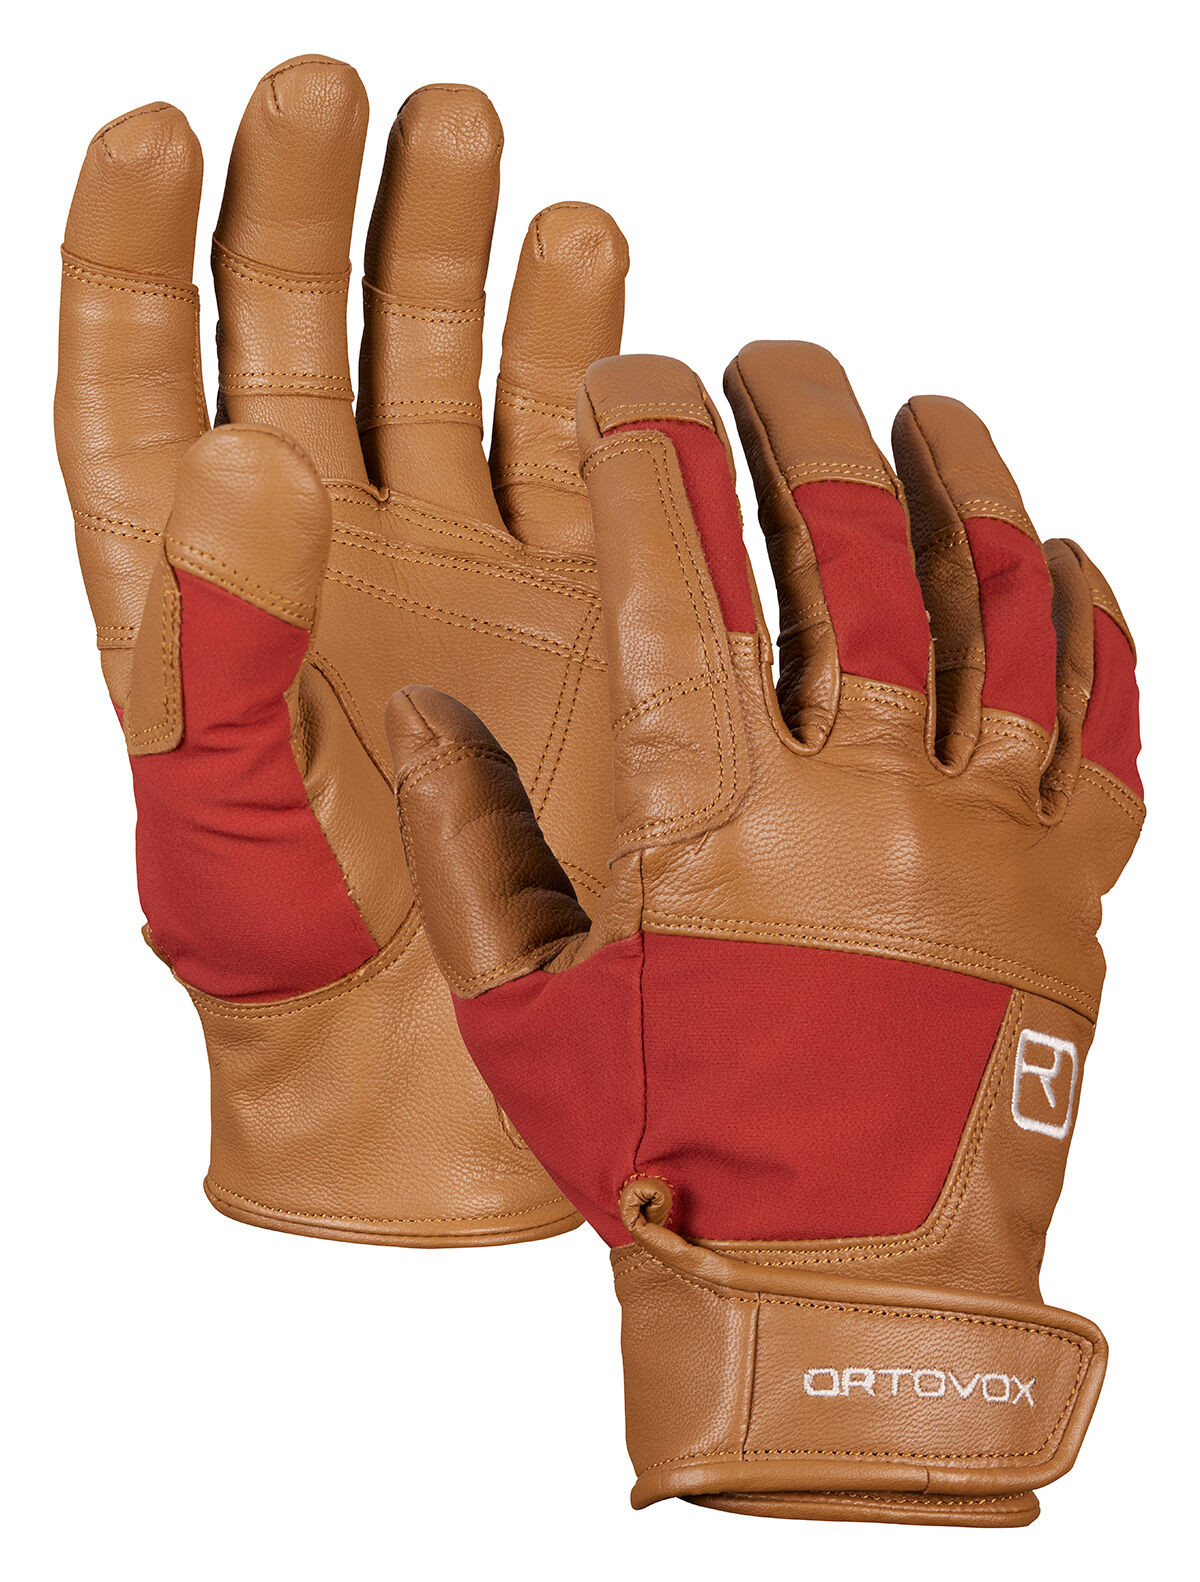 Ortovox Mountain Guide Glove - Ski gloves